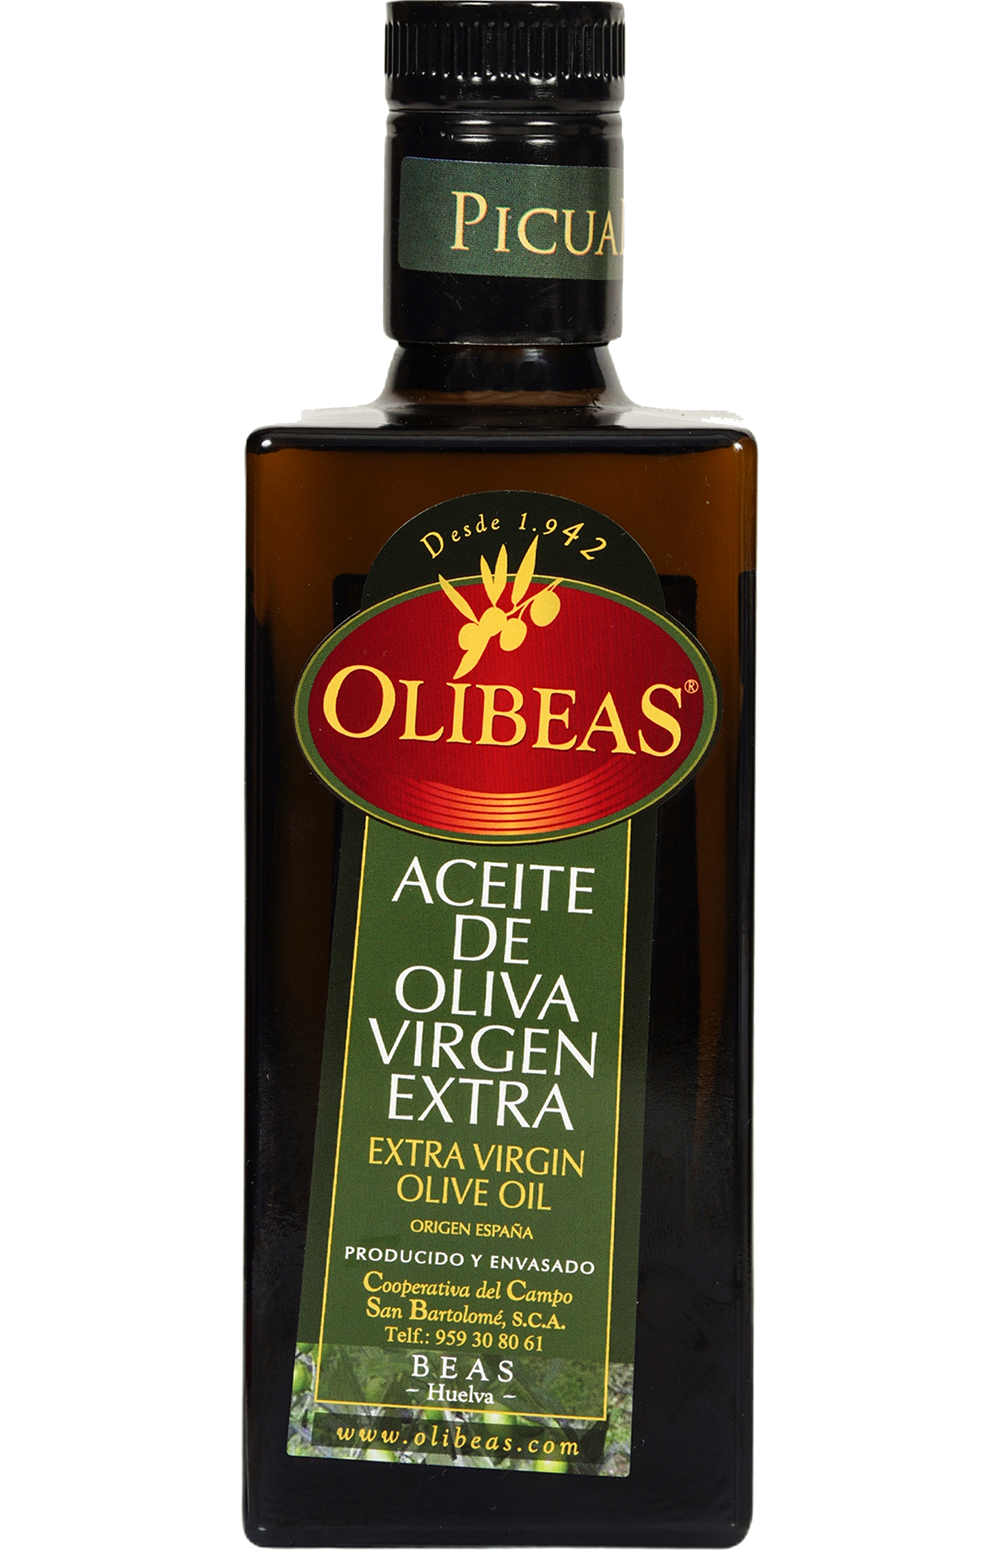 Olibeas Aceite Extra Virgin Olive Oil